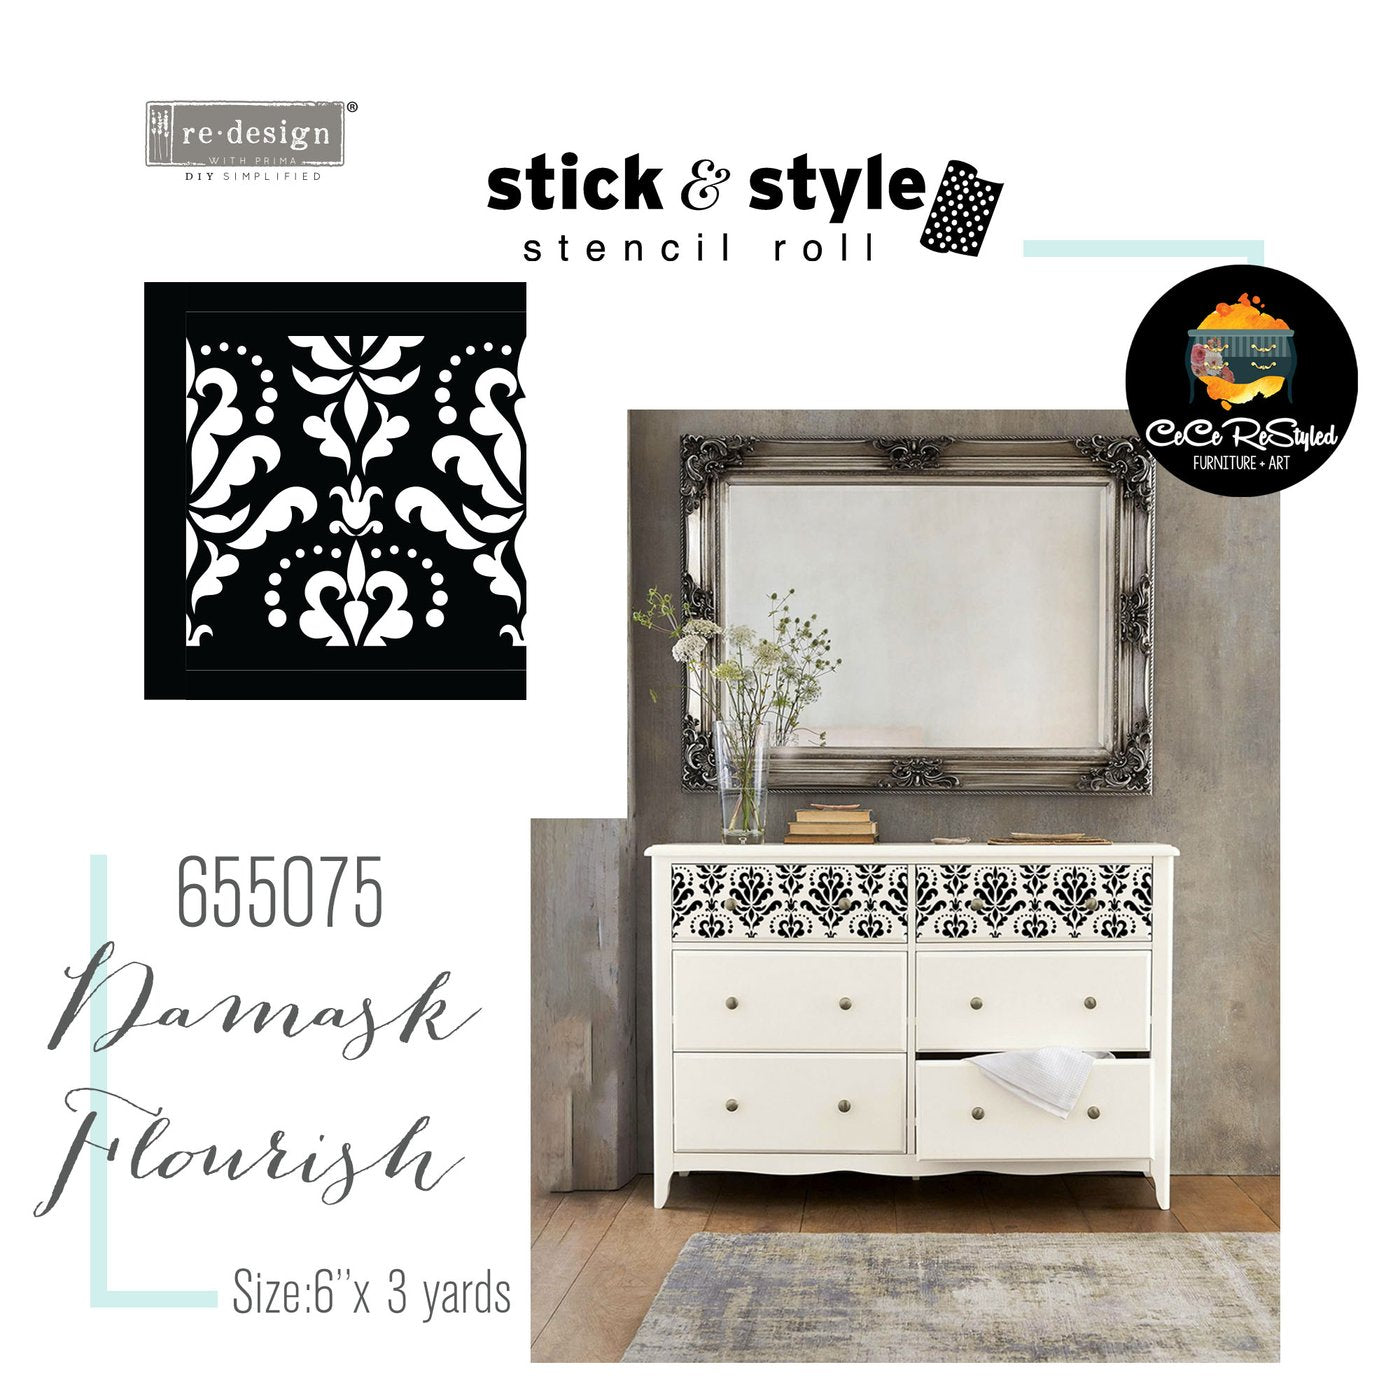 Stencils - Damask Floursih (Adhesive Roll) Stick &amp; Style Stencil